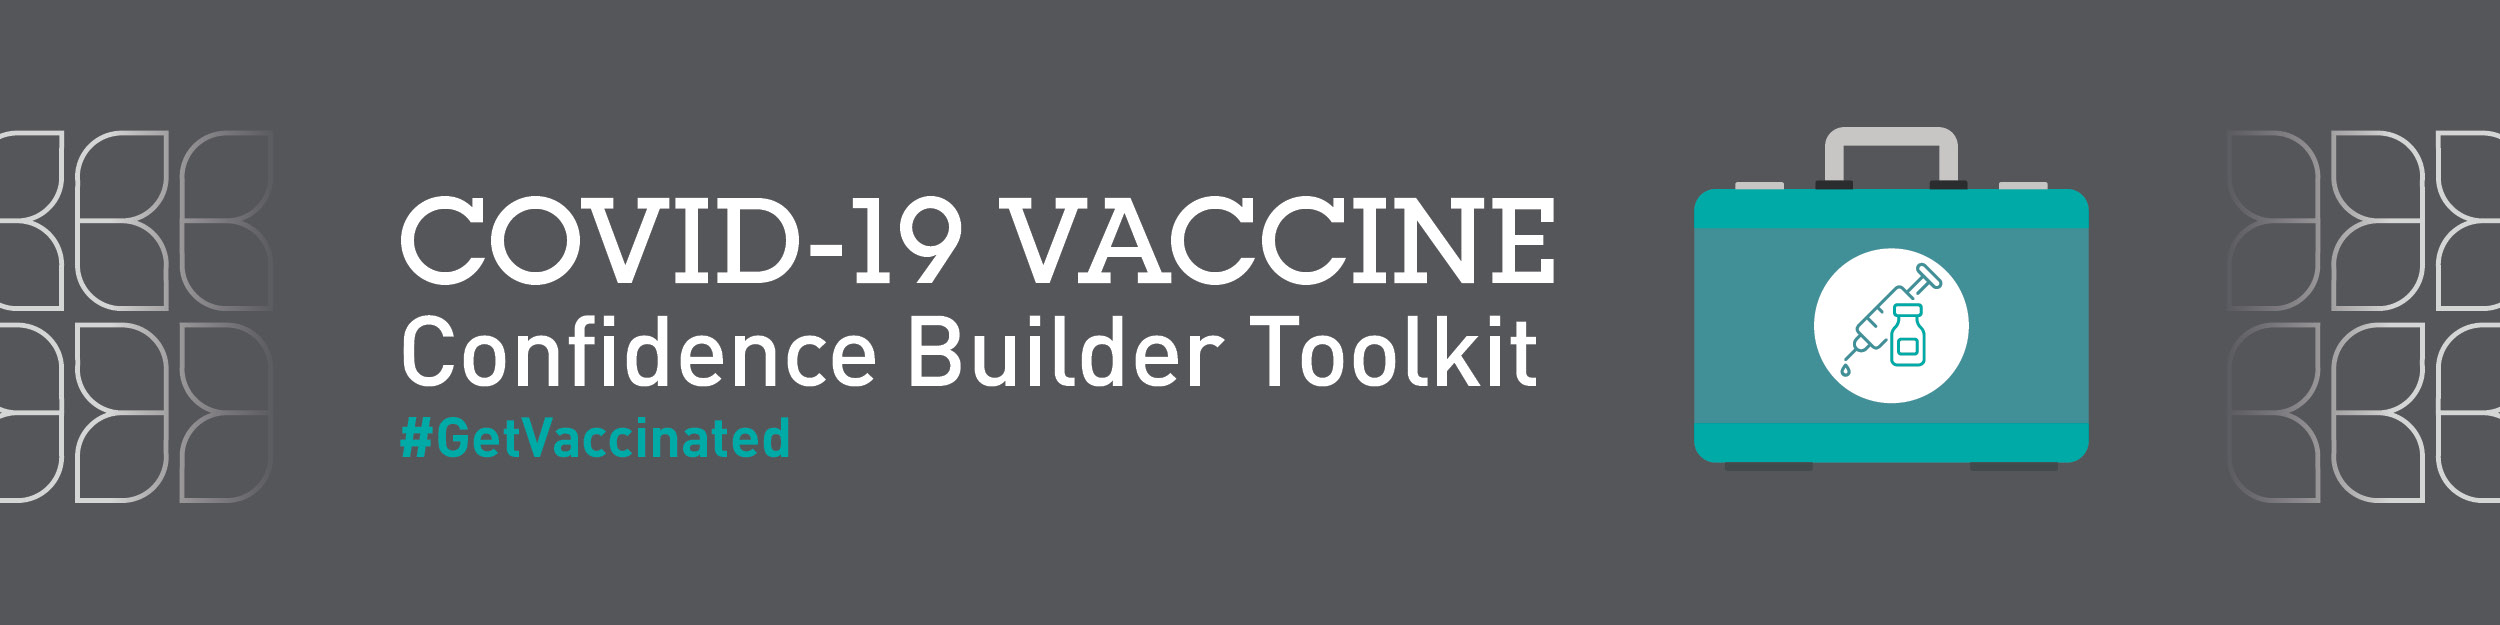 COVID-19 Vaccine Confidence Builder Toolkit